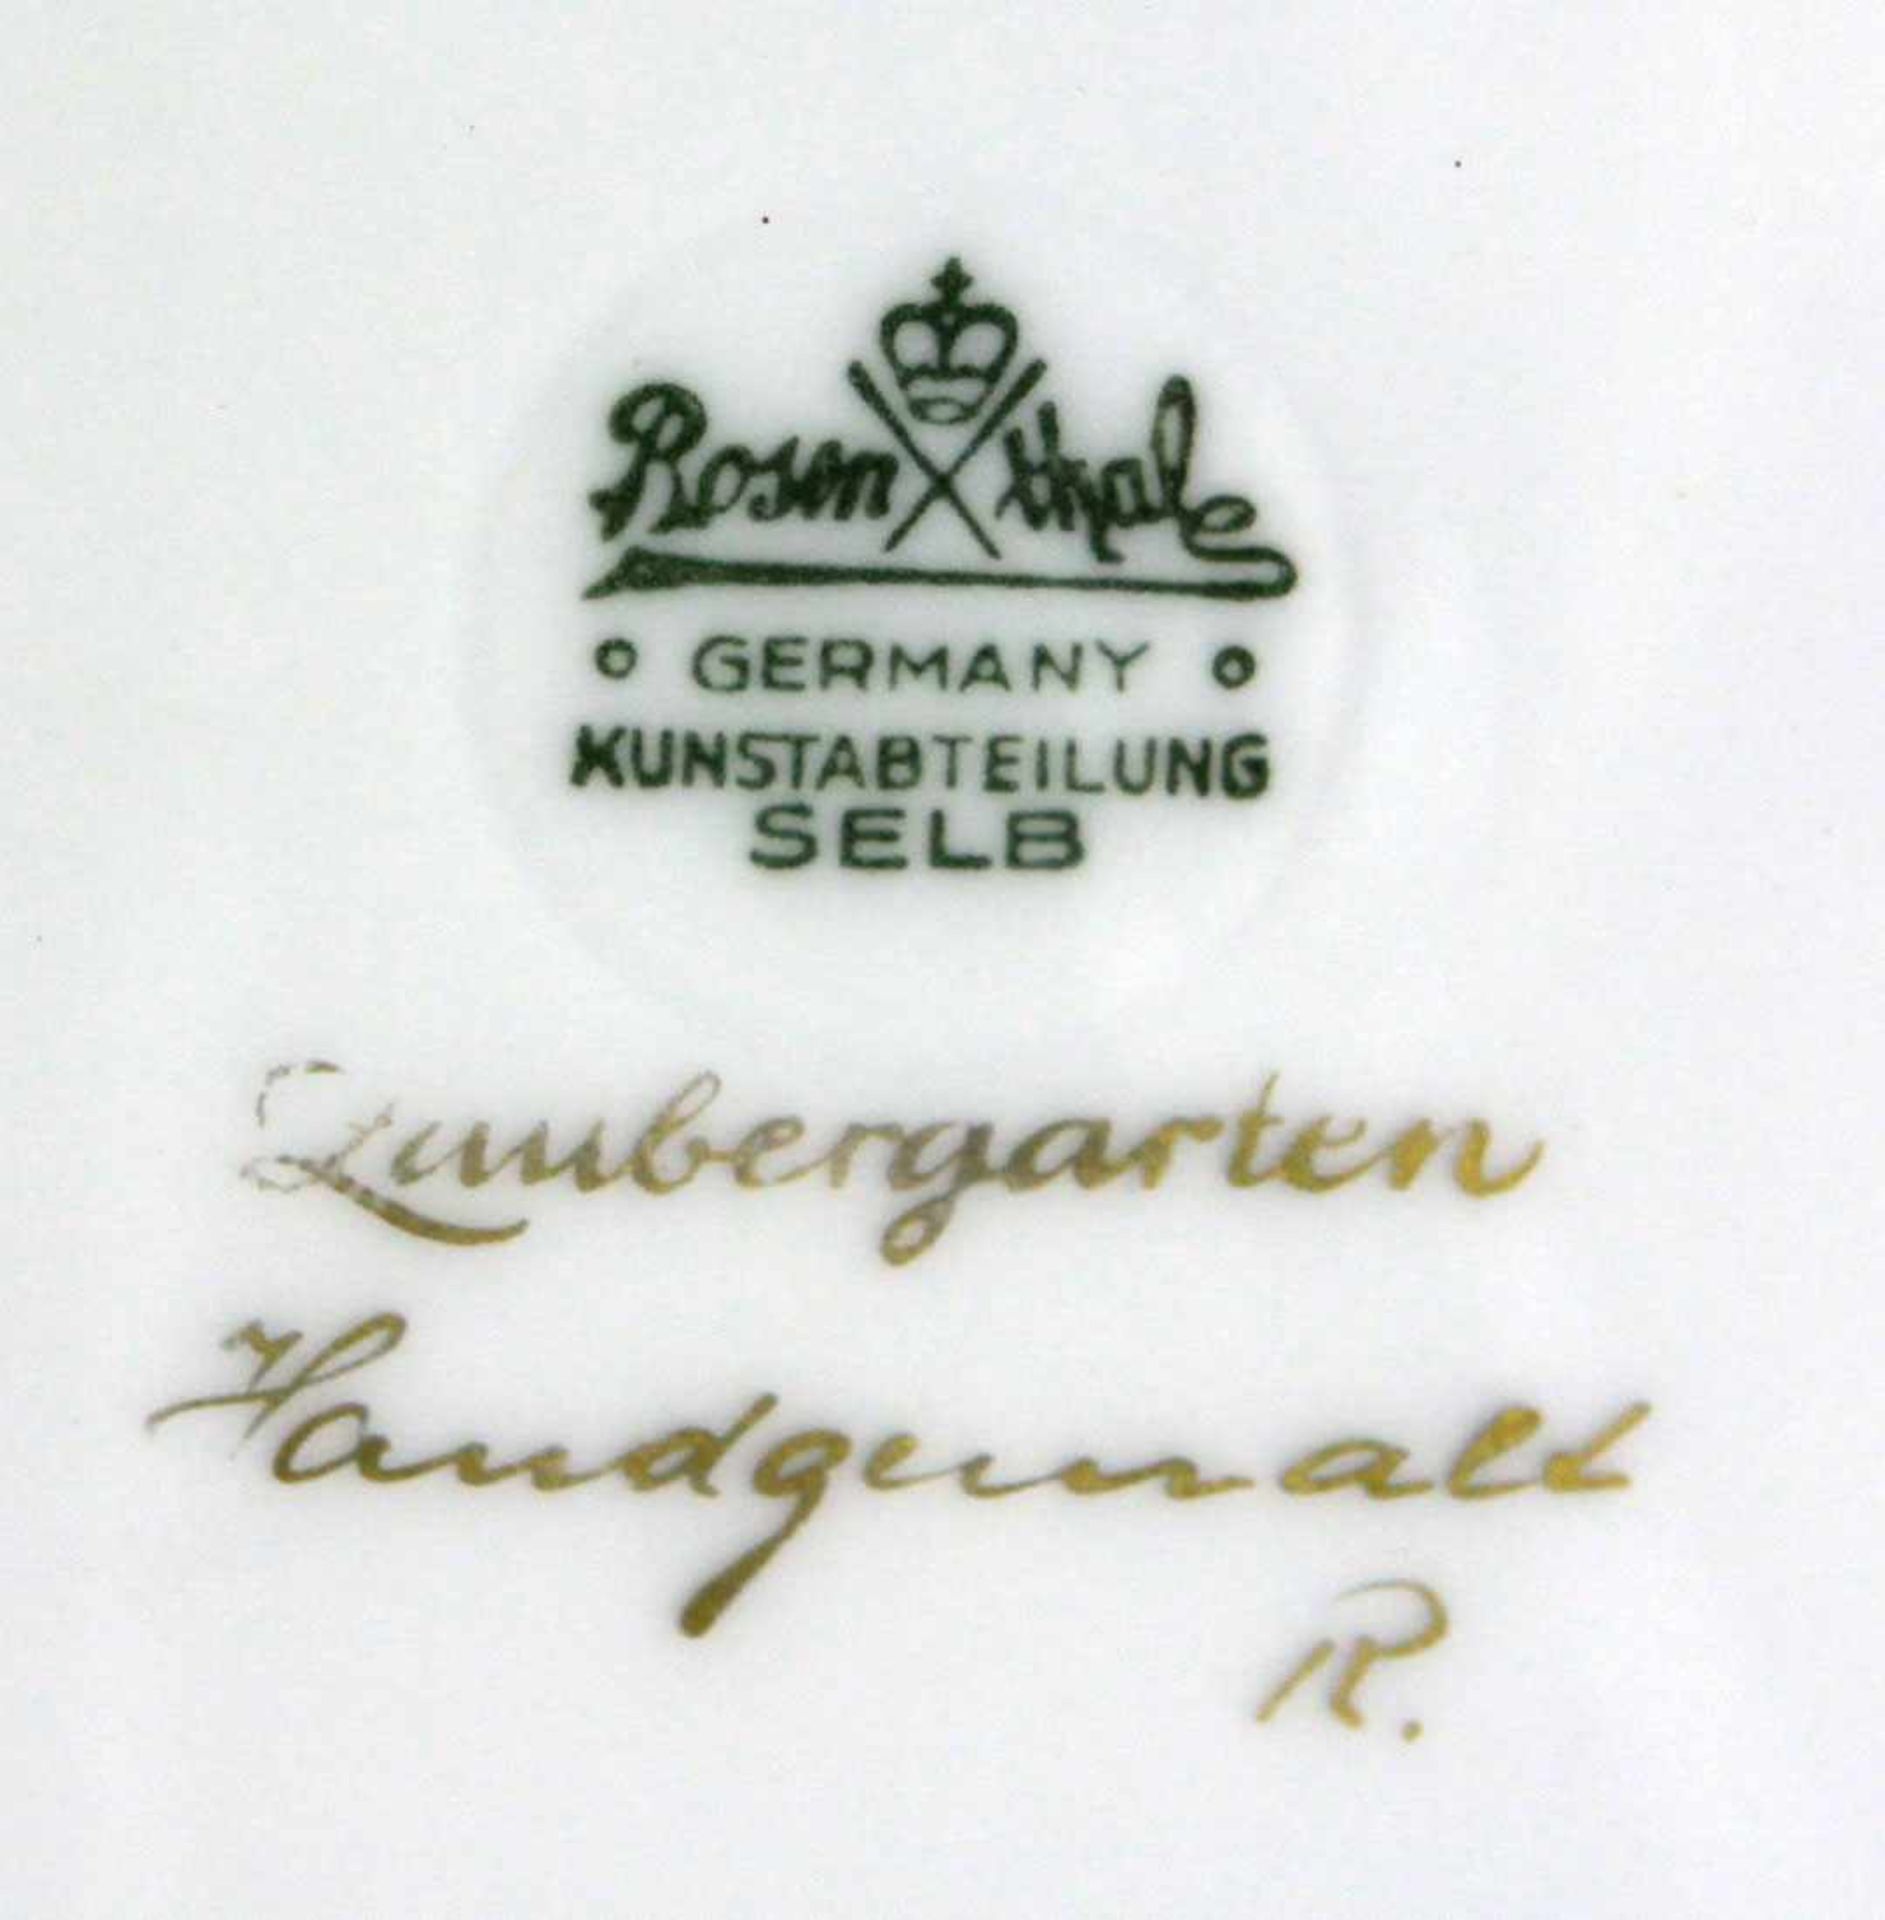 Rosenthal Deckeldose Porzellan mit unterglasurgrüner Manufakturmarke Rosenthal Germany - Bild 3 aus 3